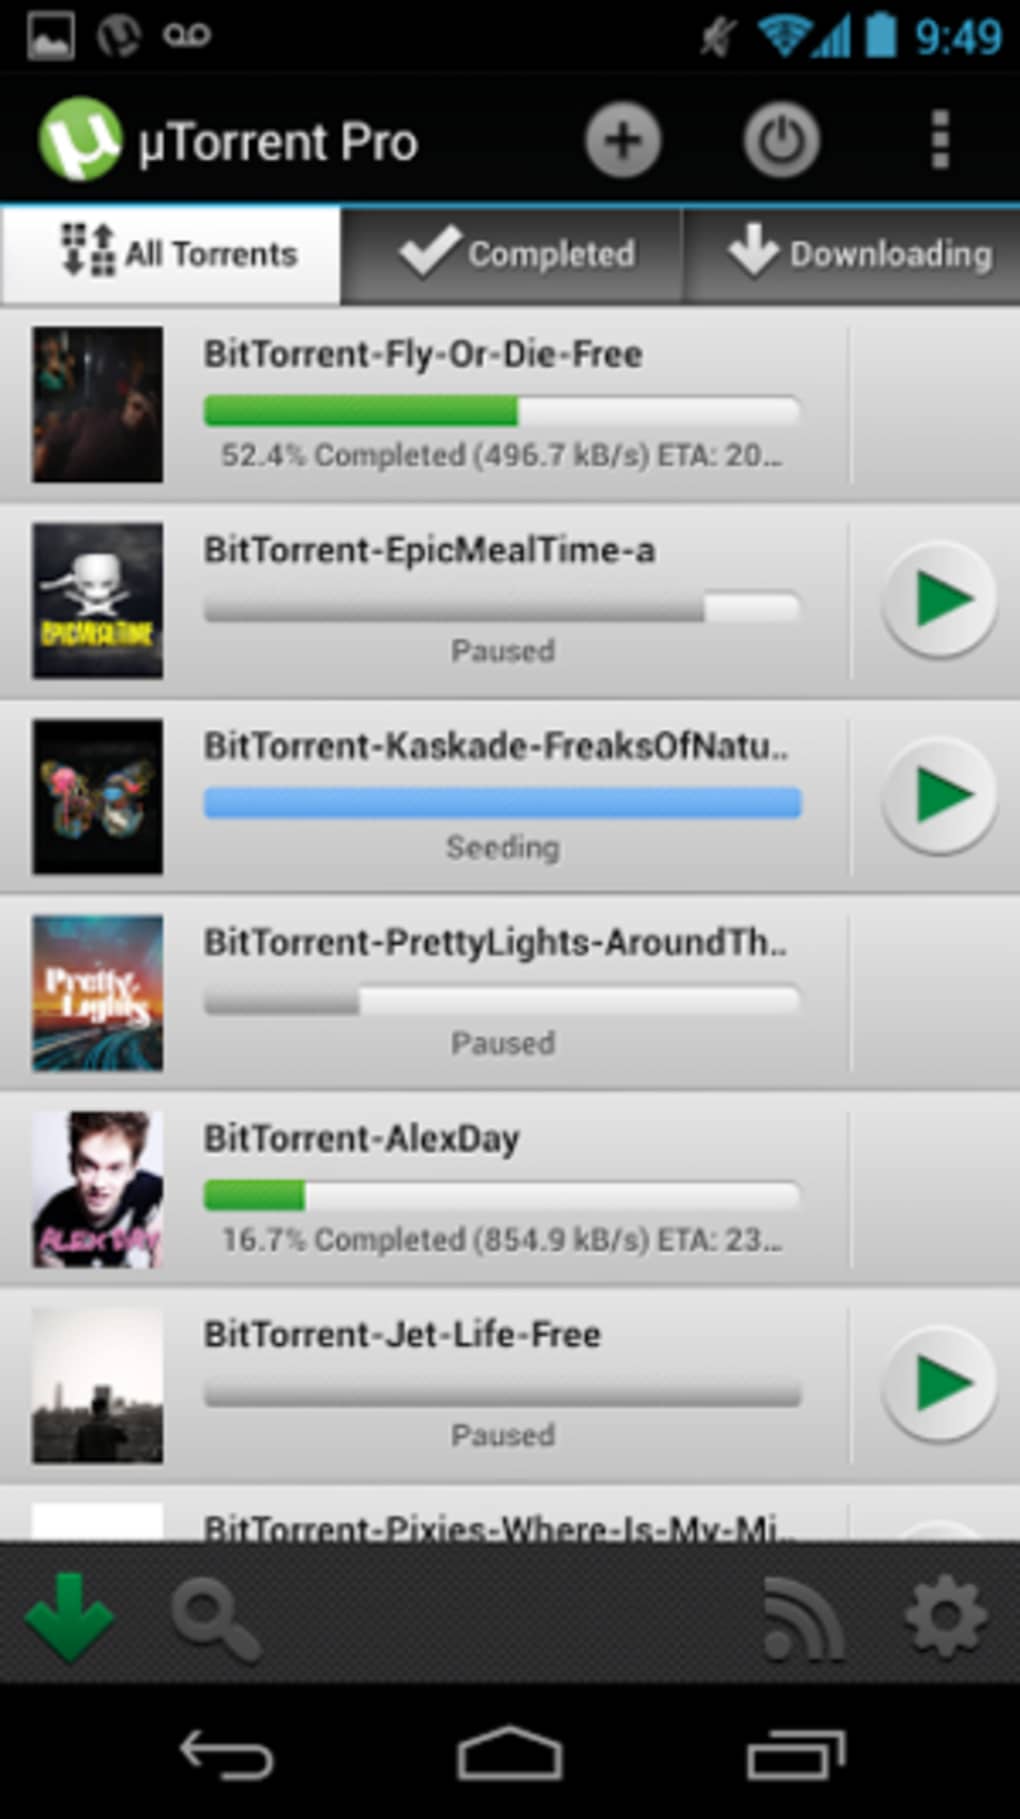 utorrent pro app